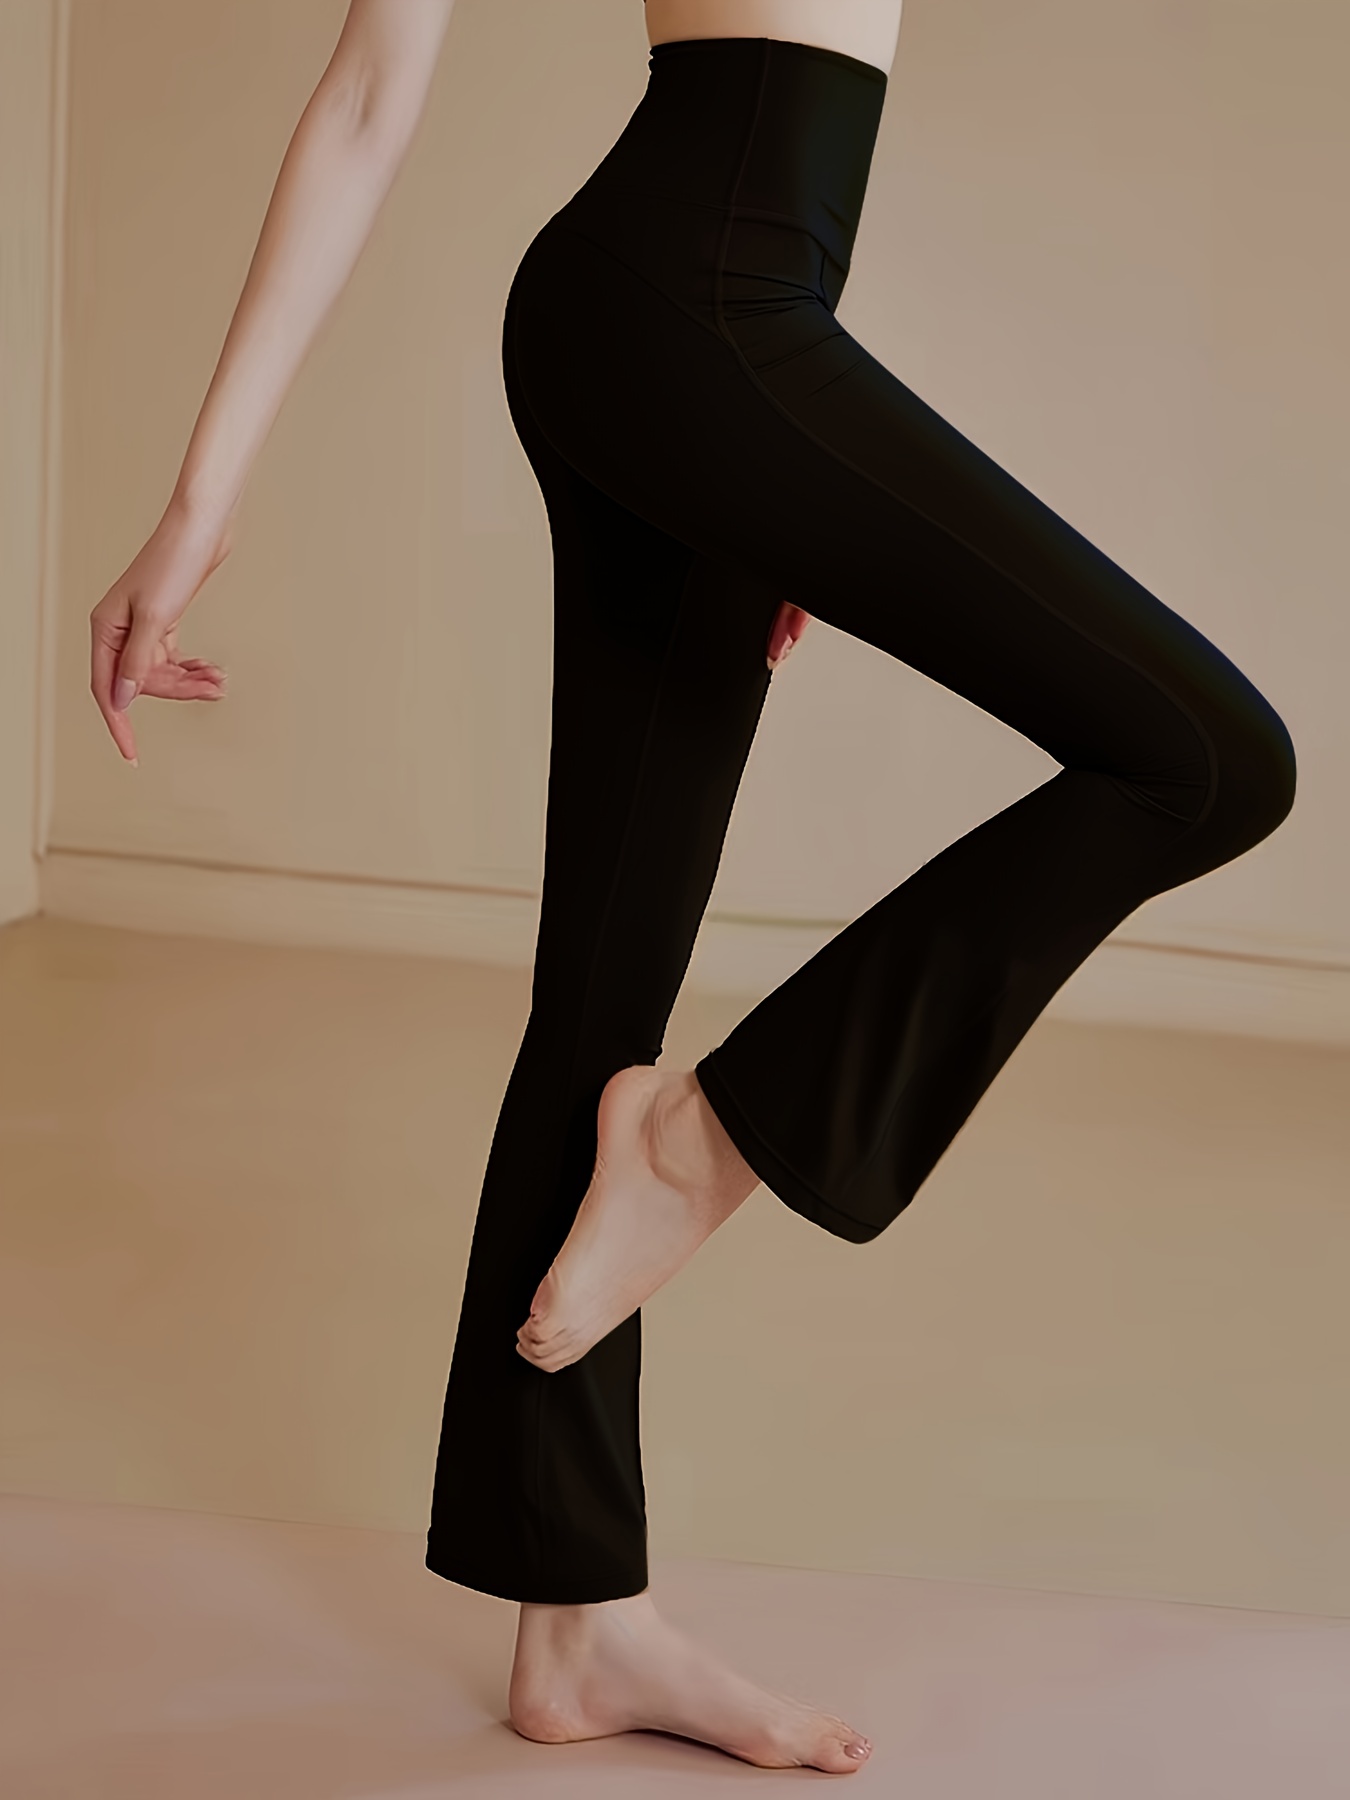 Designer Women Well-designed Female High Split Trousers Female Loose Yoga  Pants Casual Fitness Yoga Wide Leg Pants